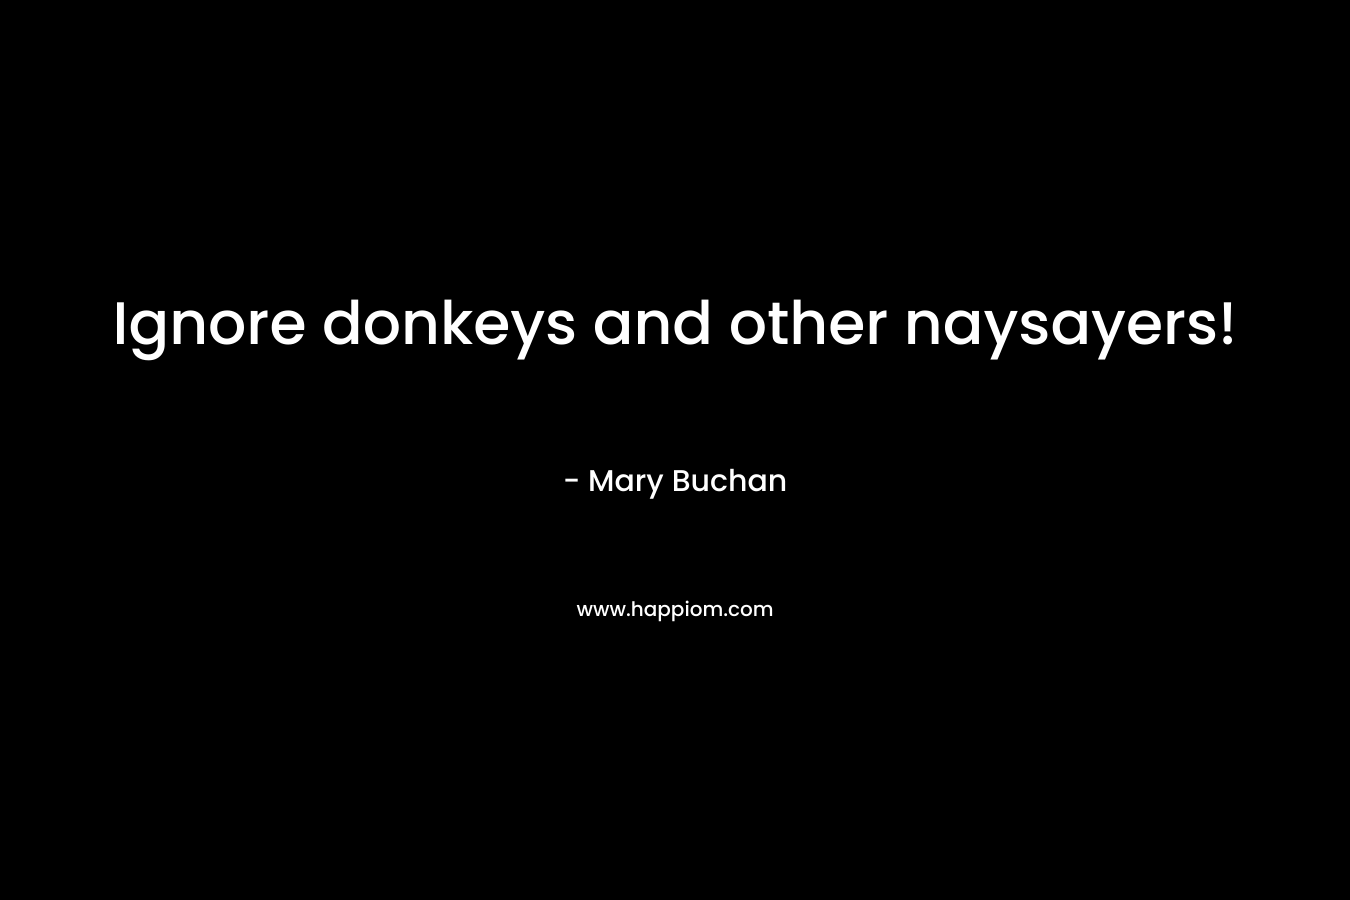 Ignore donkeys and other naysayers!